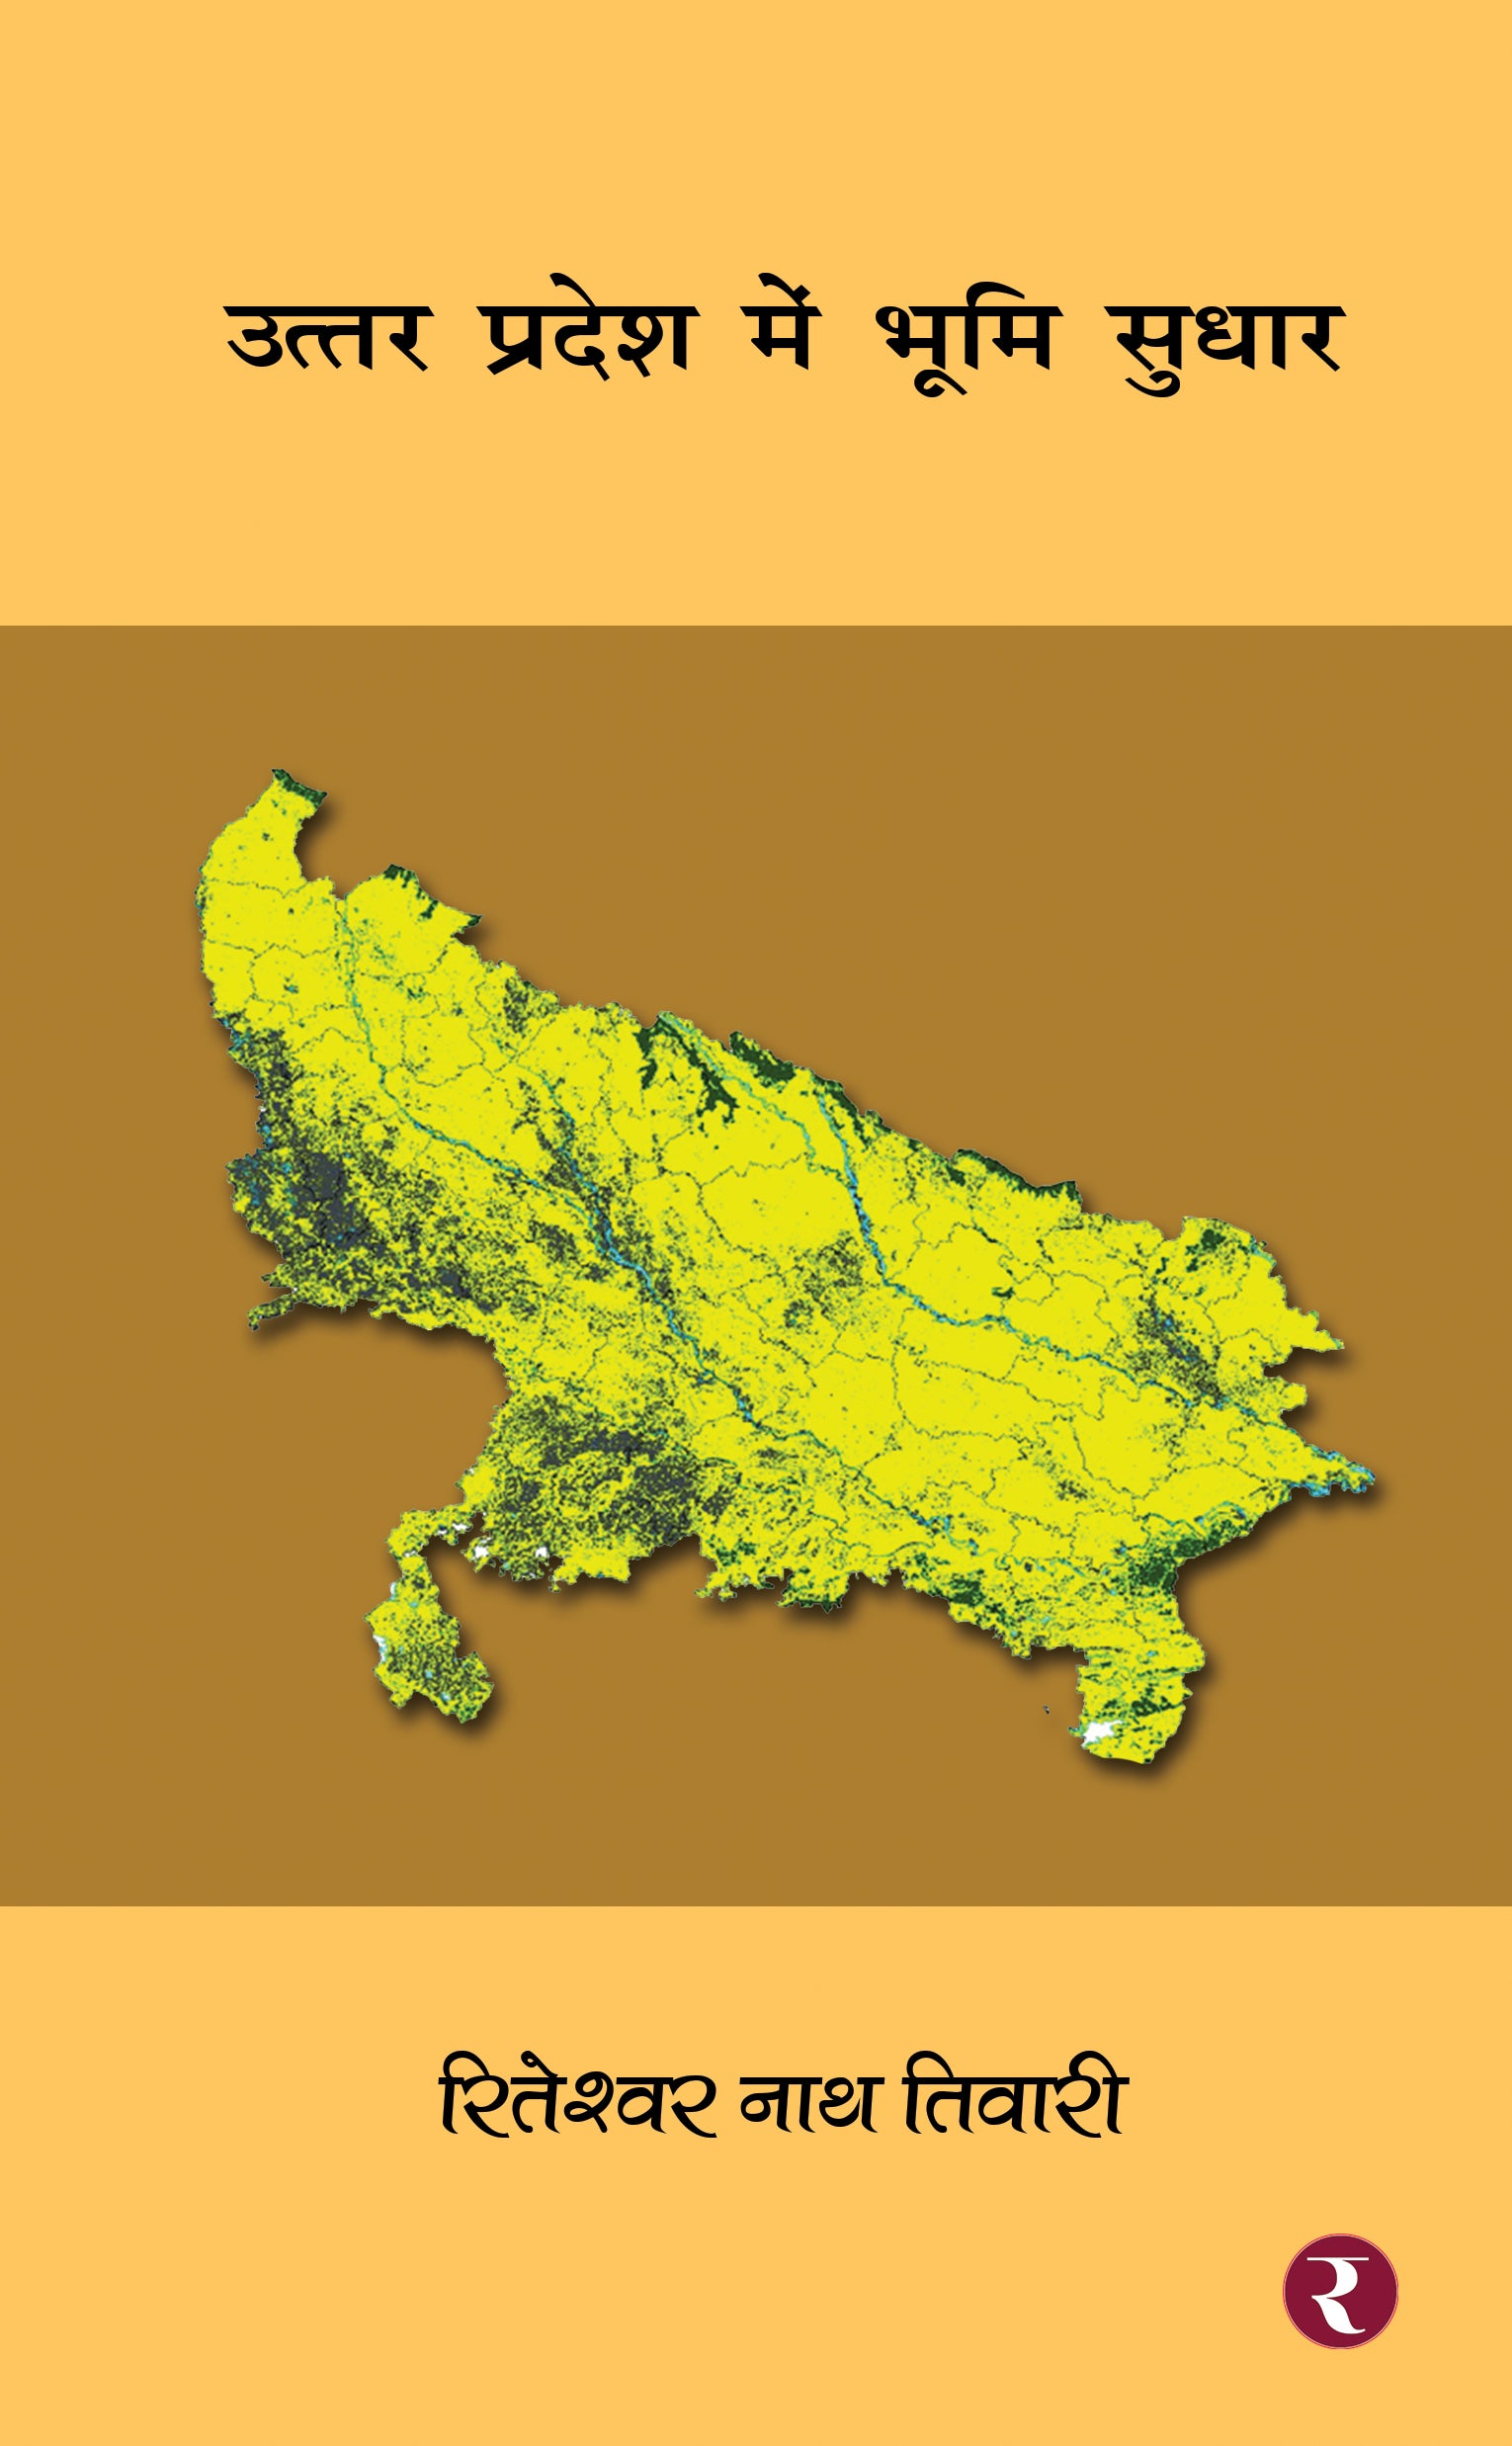 Uttar Pradesh Mein Bhoomi Sudhar